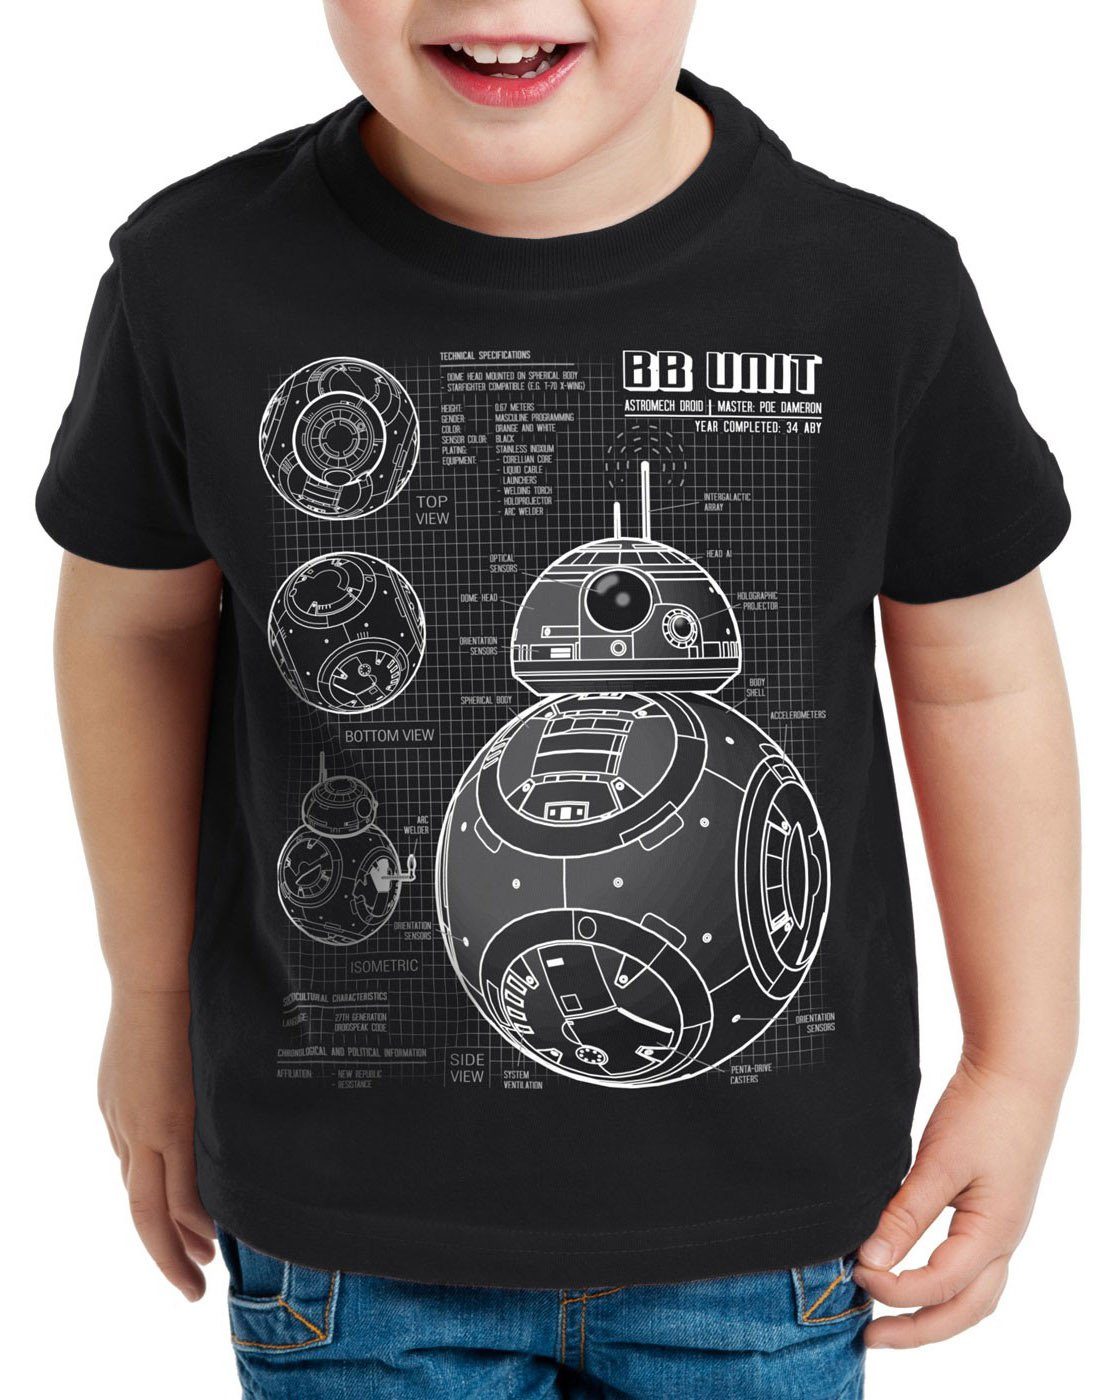 style3 Print-Shirt Kinder T-Shirt BB Unit blaupause astromech droide schwarz